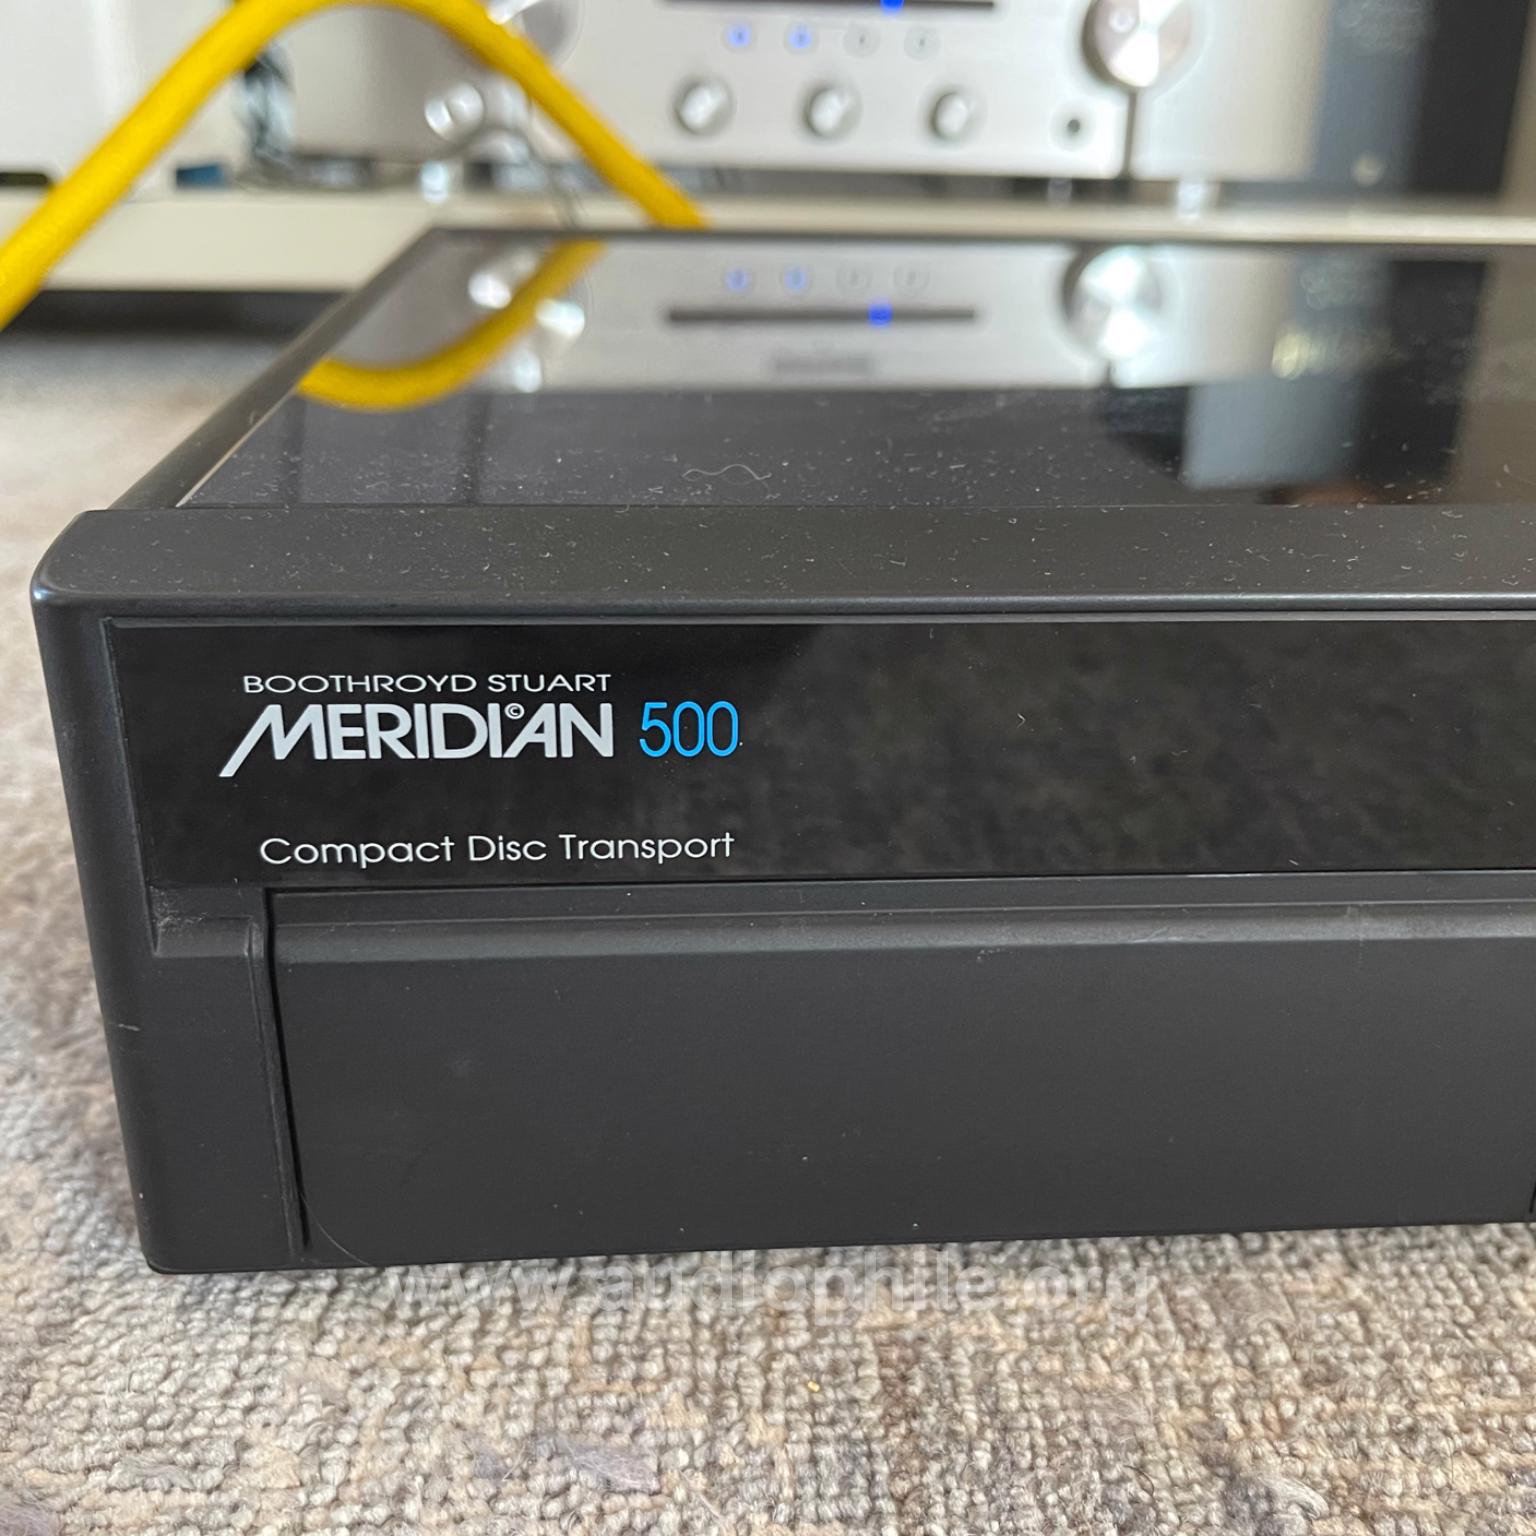 Meridian 500 cd transport